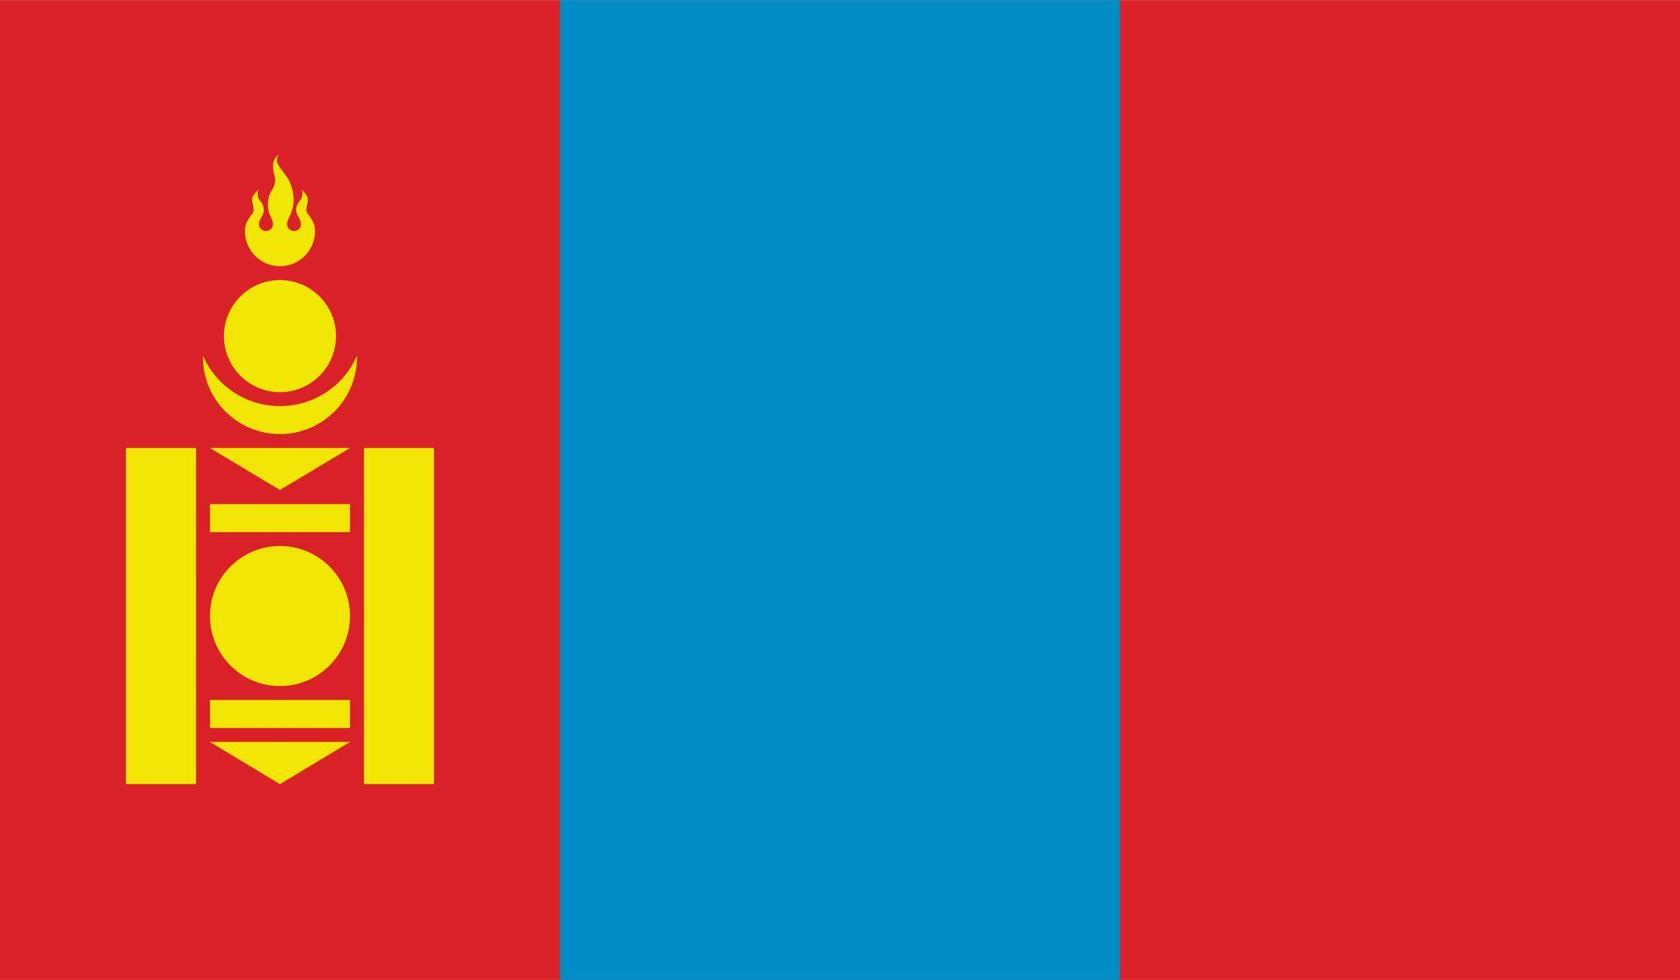 Mongolia flag image vector